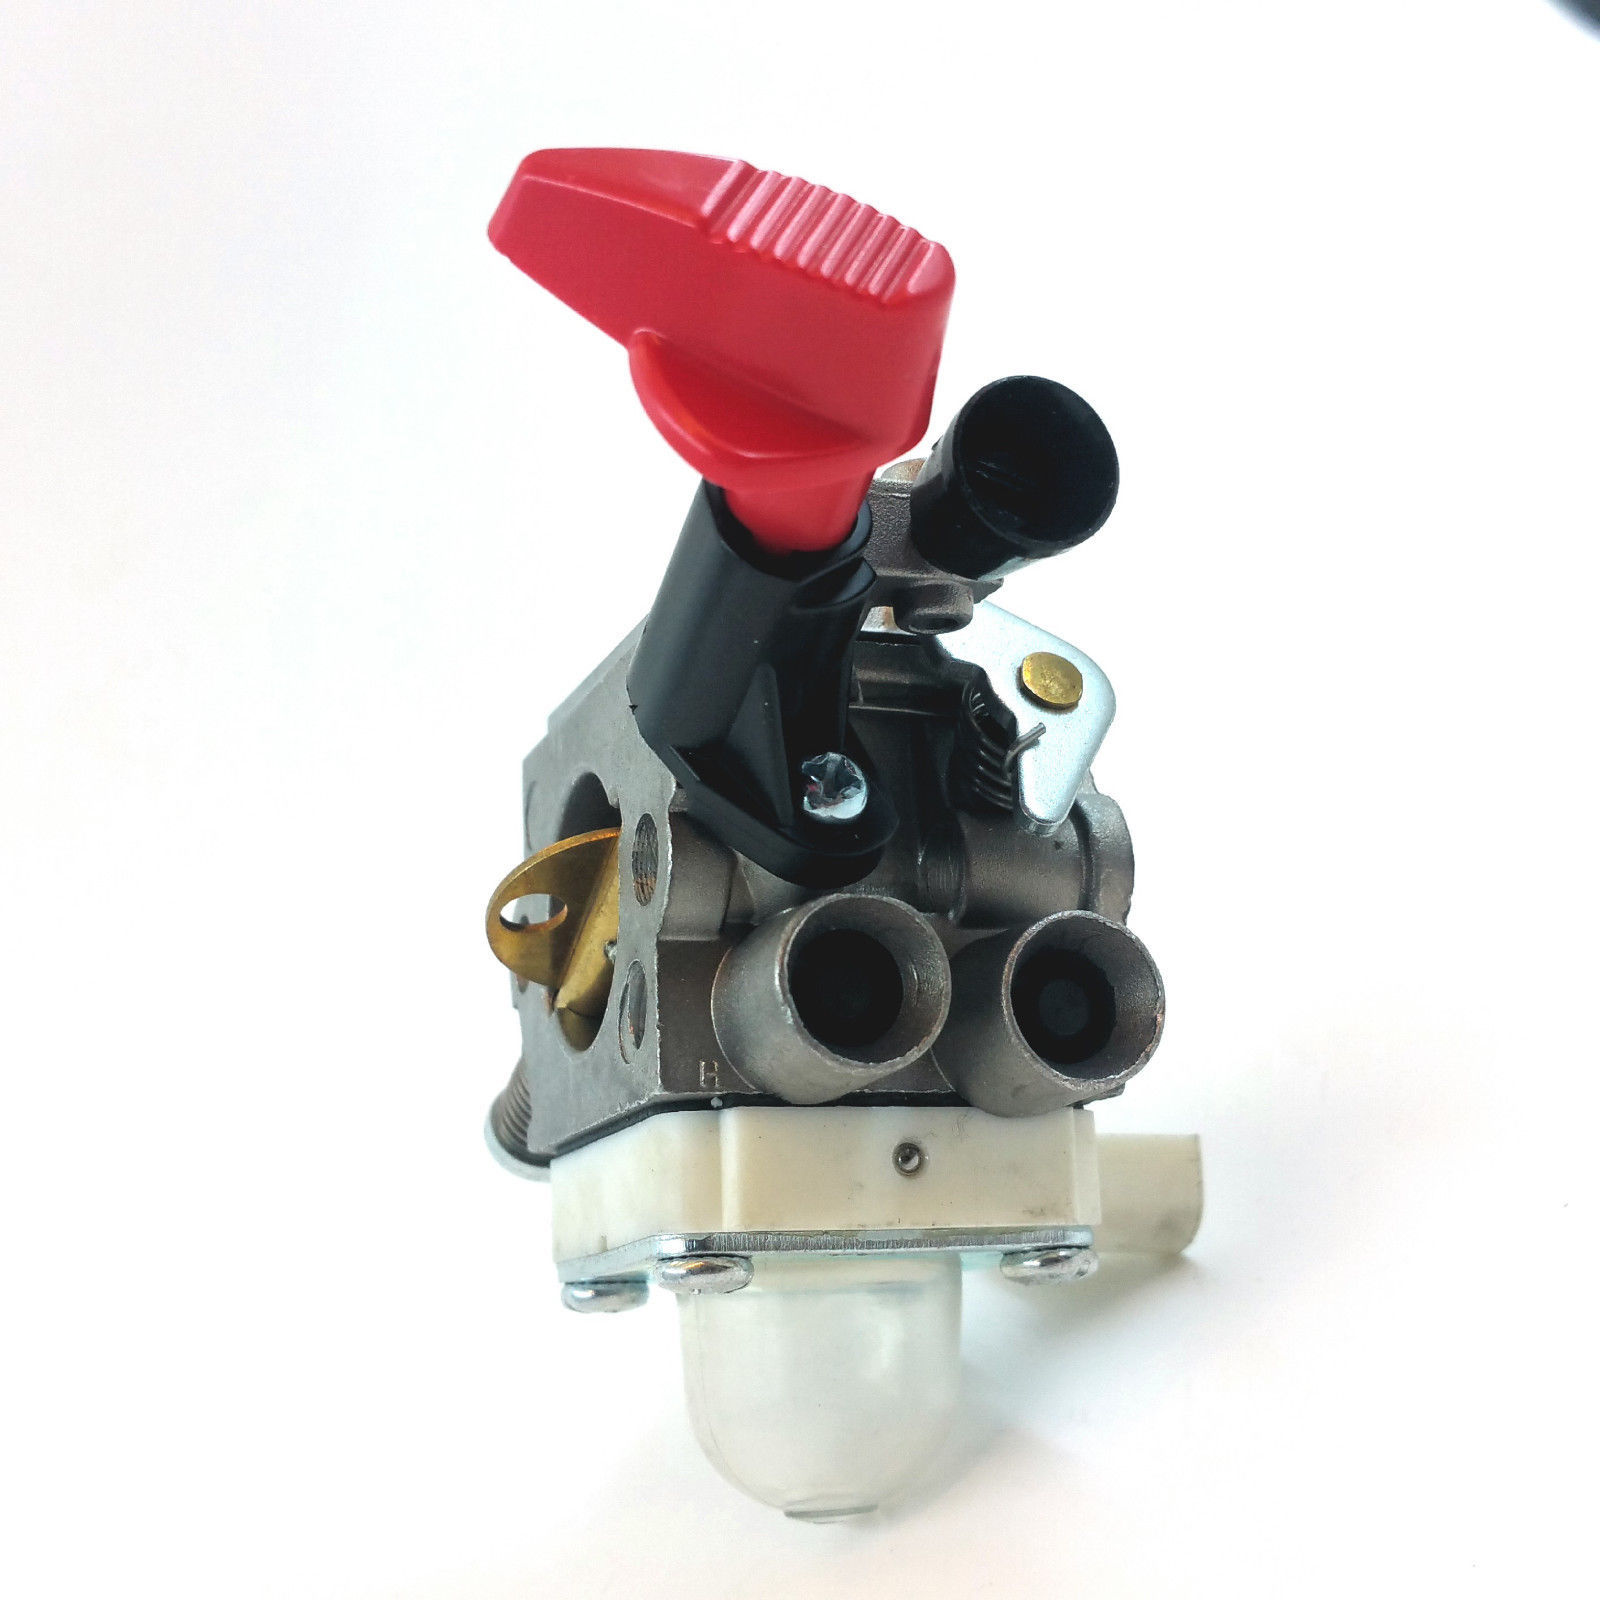 Replaces Carburetor For Stihl FS70R Trimmer